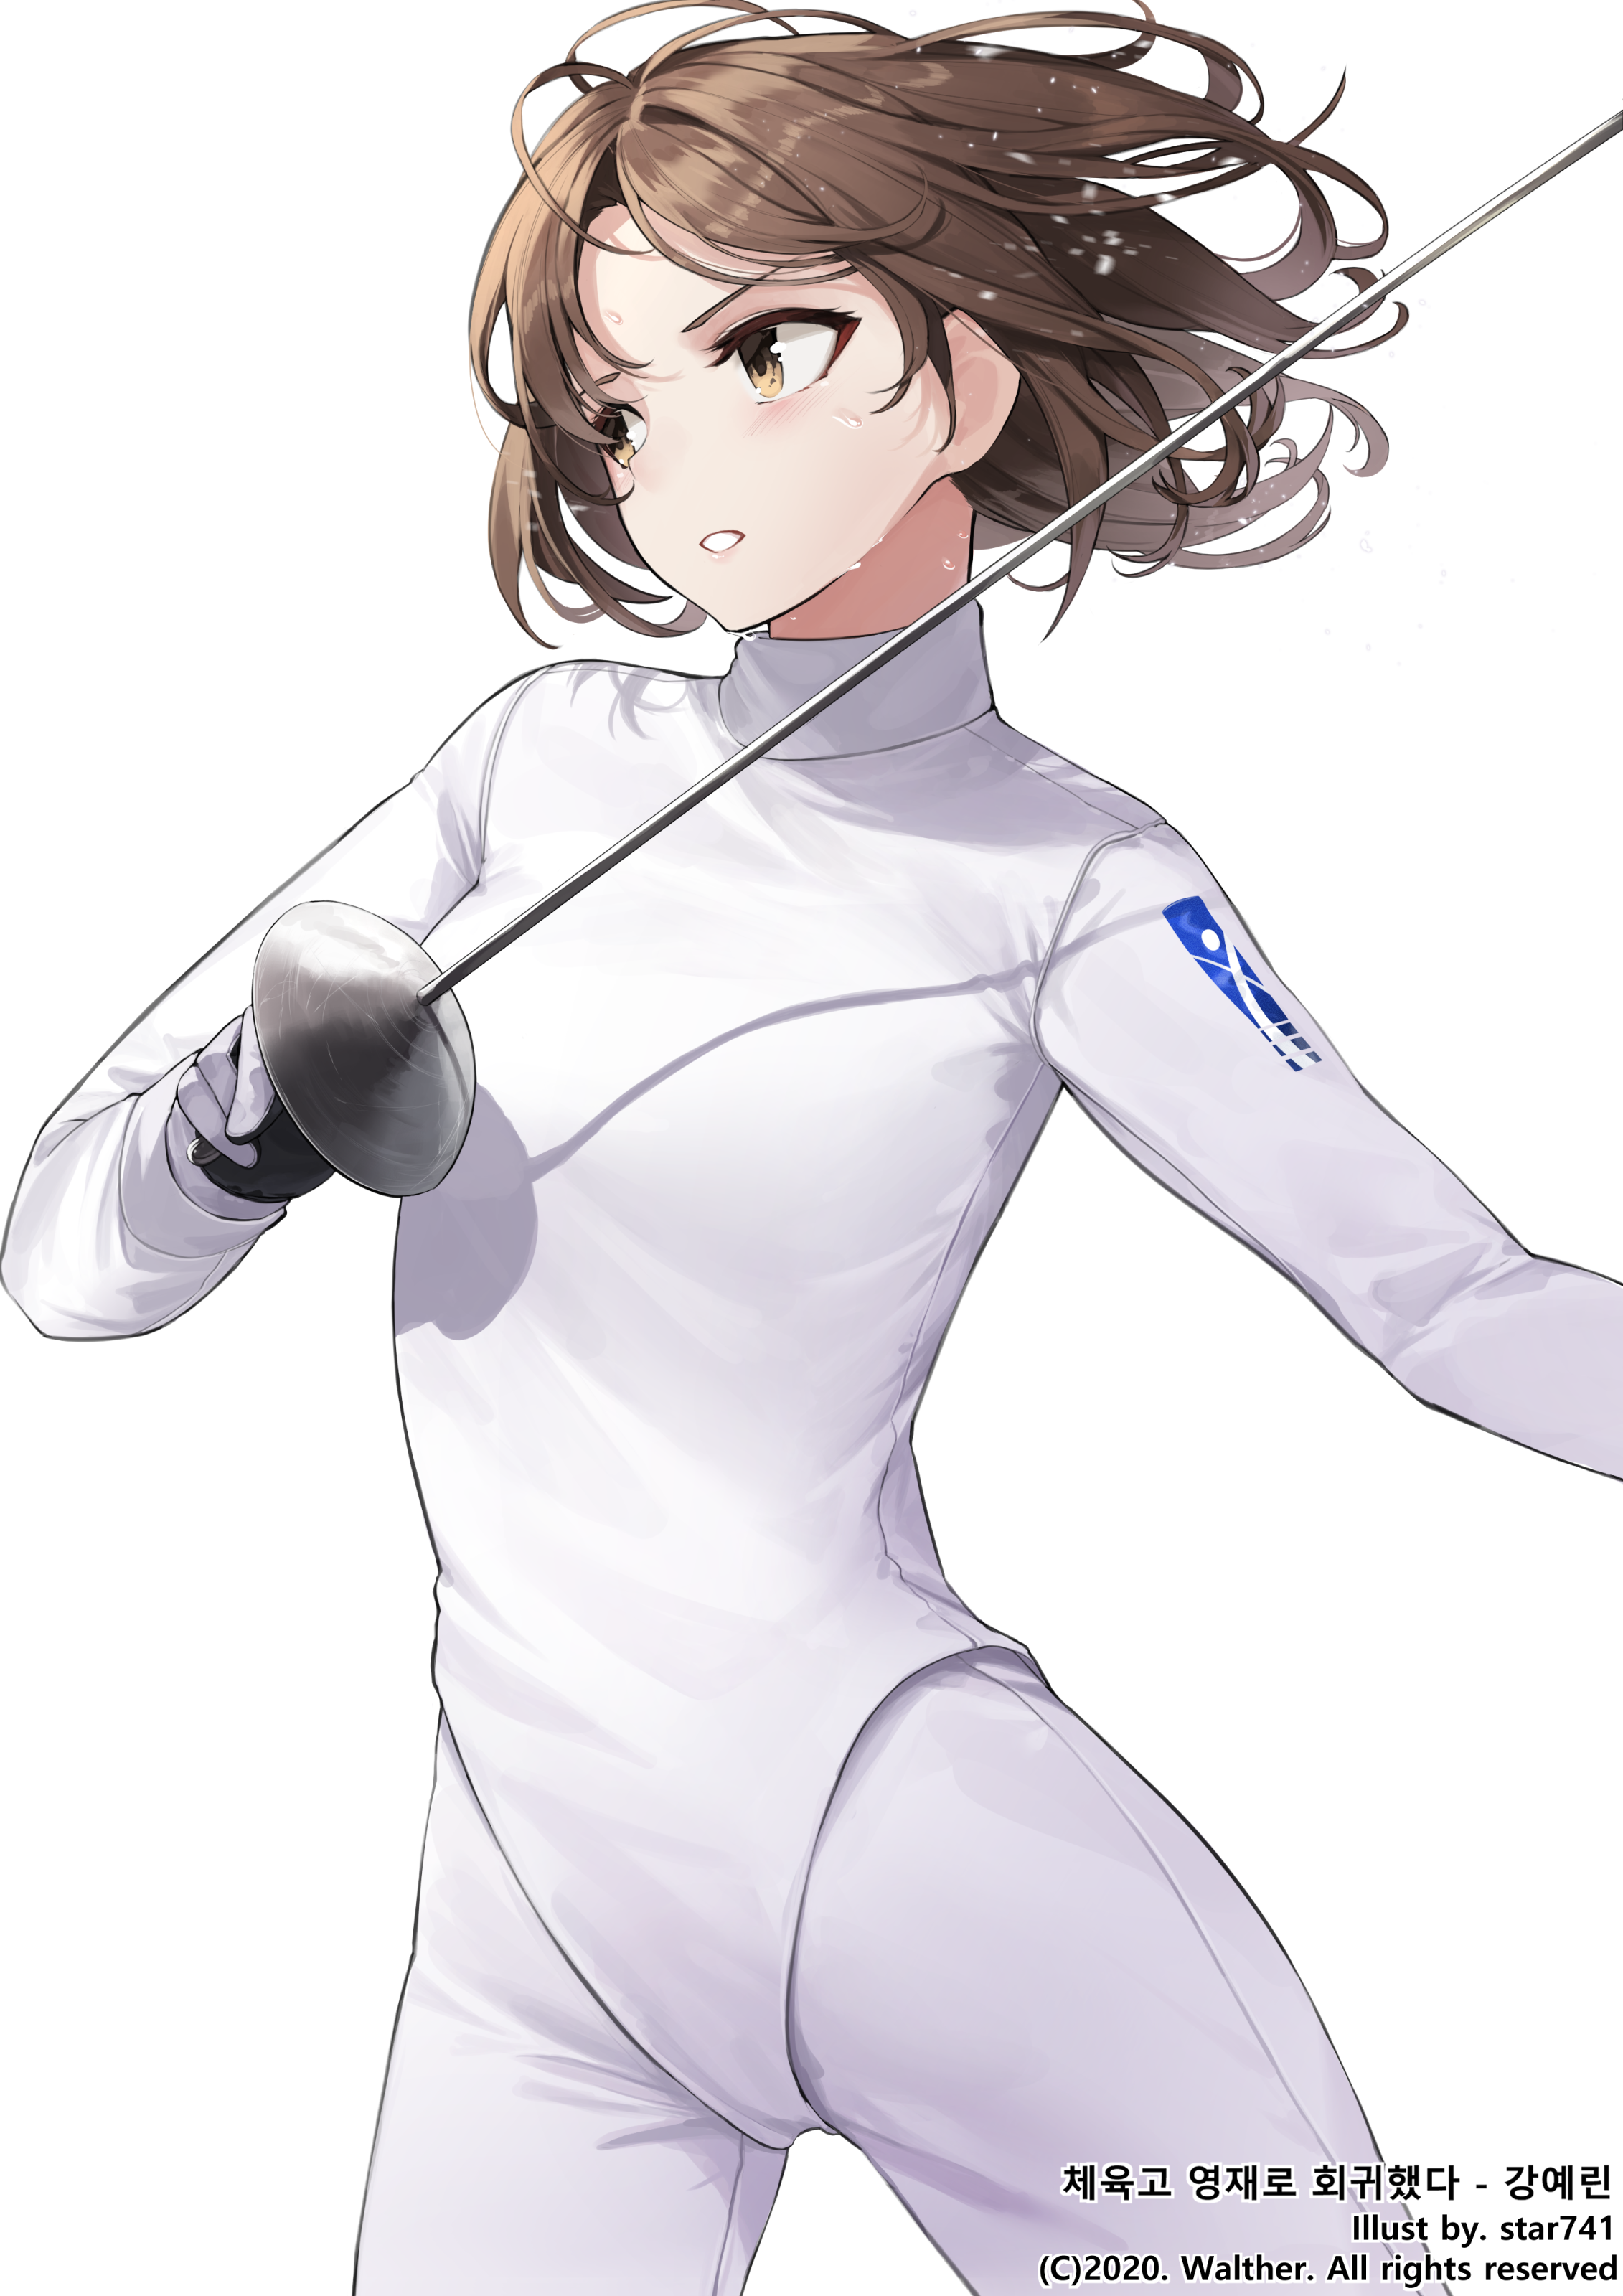 Anime 2262x3200 anime anime girls digital art artwork 2D portrait display sword fencing (sport) bodysuit short hair brunette brown eyes sweat star741